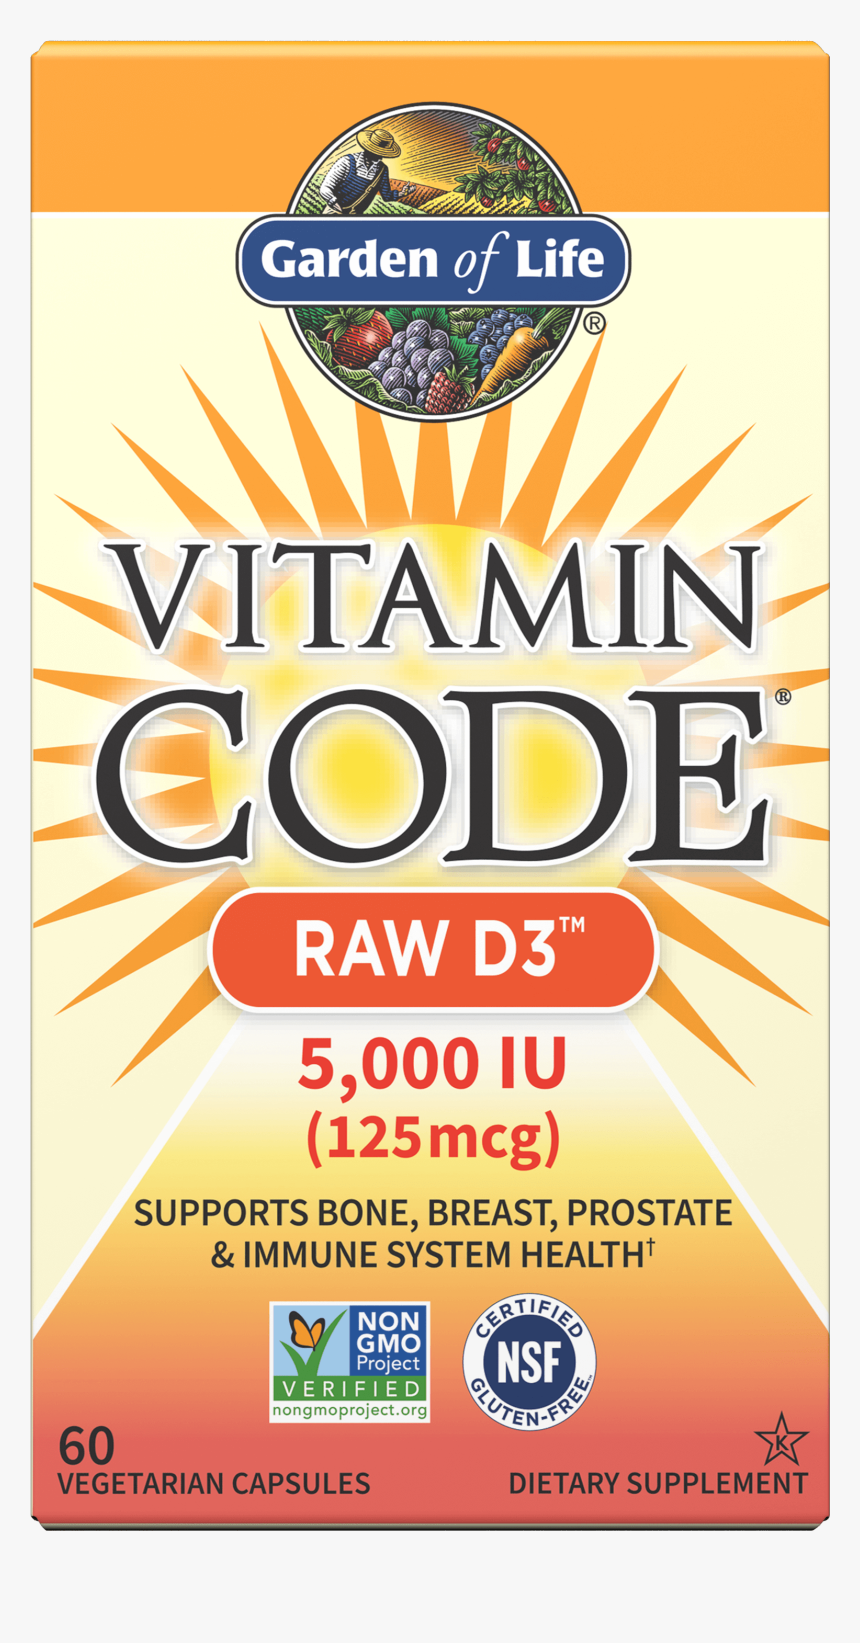 Vitamin Code Raw D3 5,000 Iu - Garden Of Life Vitamin Code Women, HD Png Download, Free Download